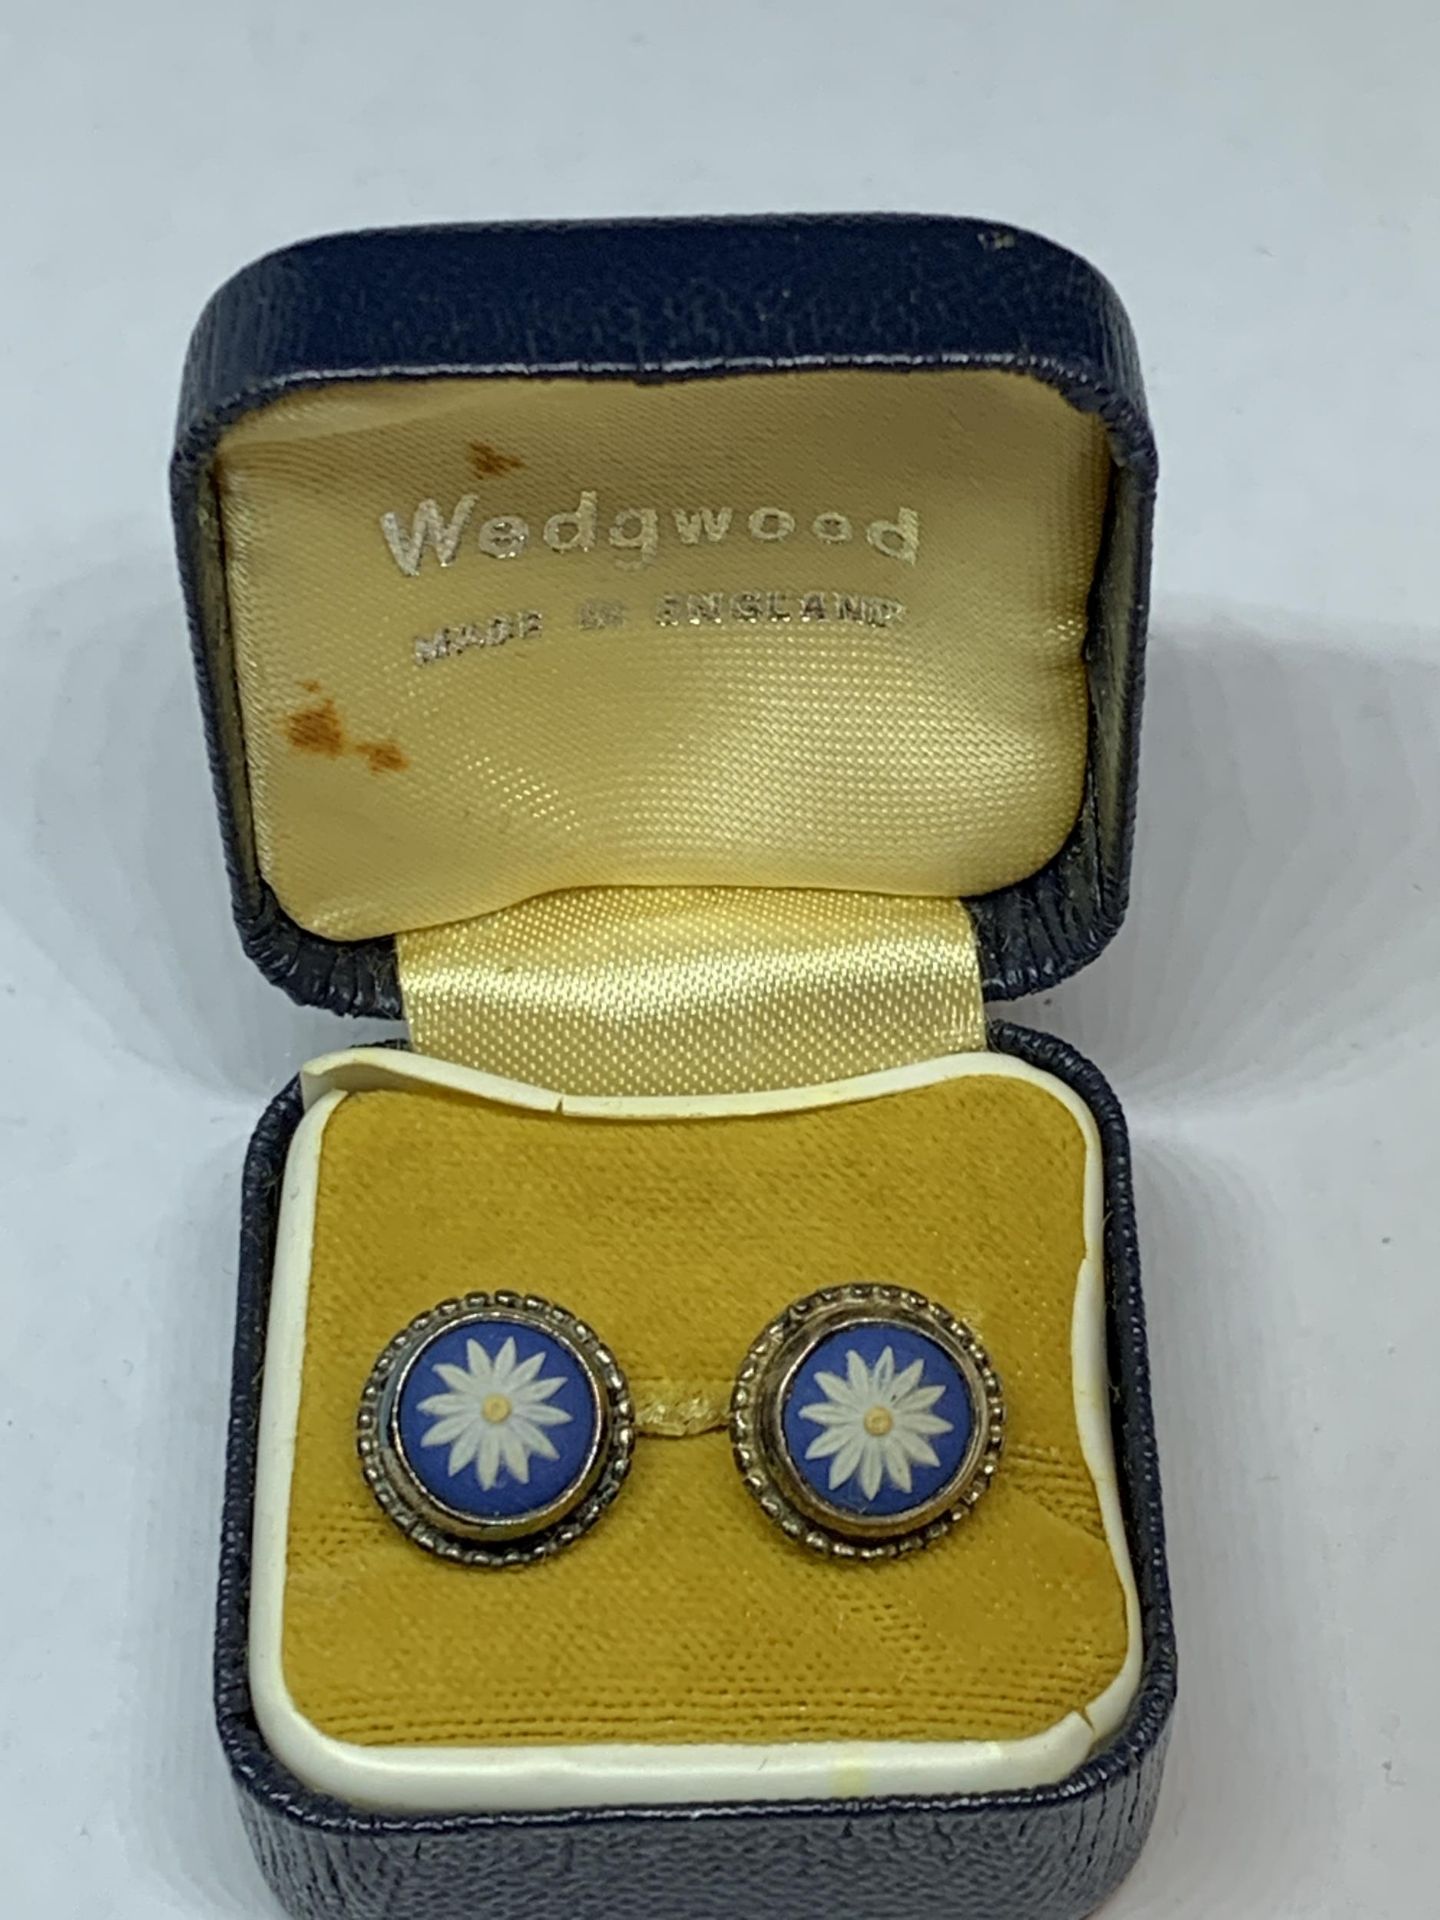 A PAIR OF WEDGWOOD JASPERWARE BLUE STONE EARRINGS WITH DAISY DESIGN IN ORIGINAL PRESENTATION BOX